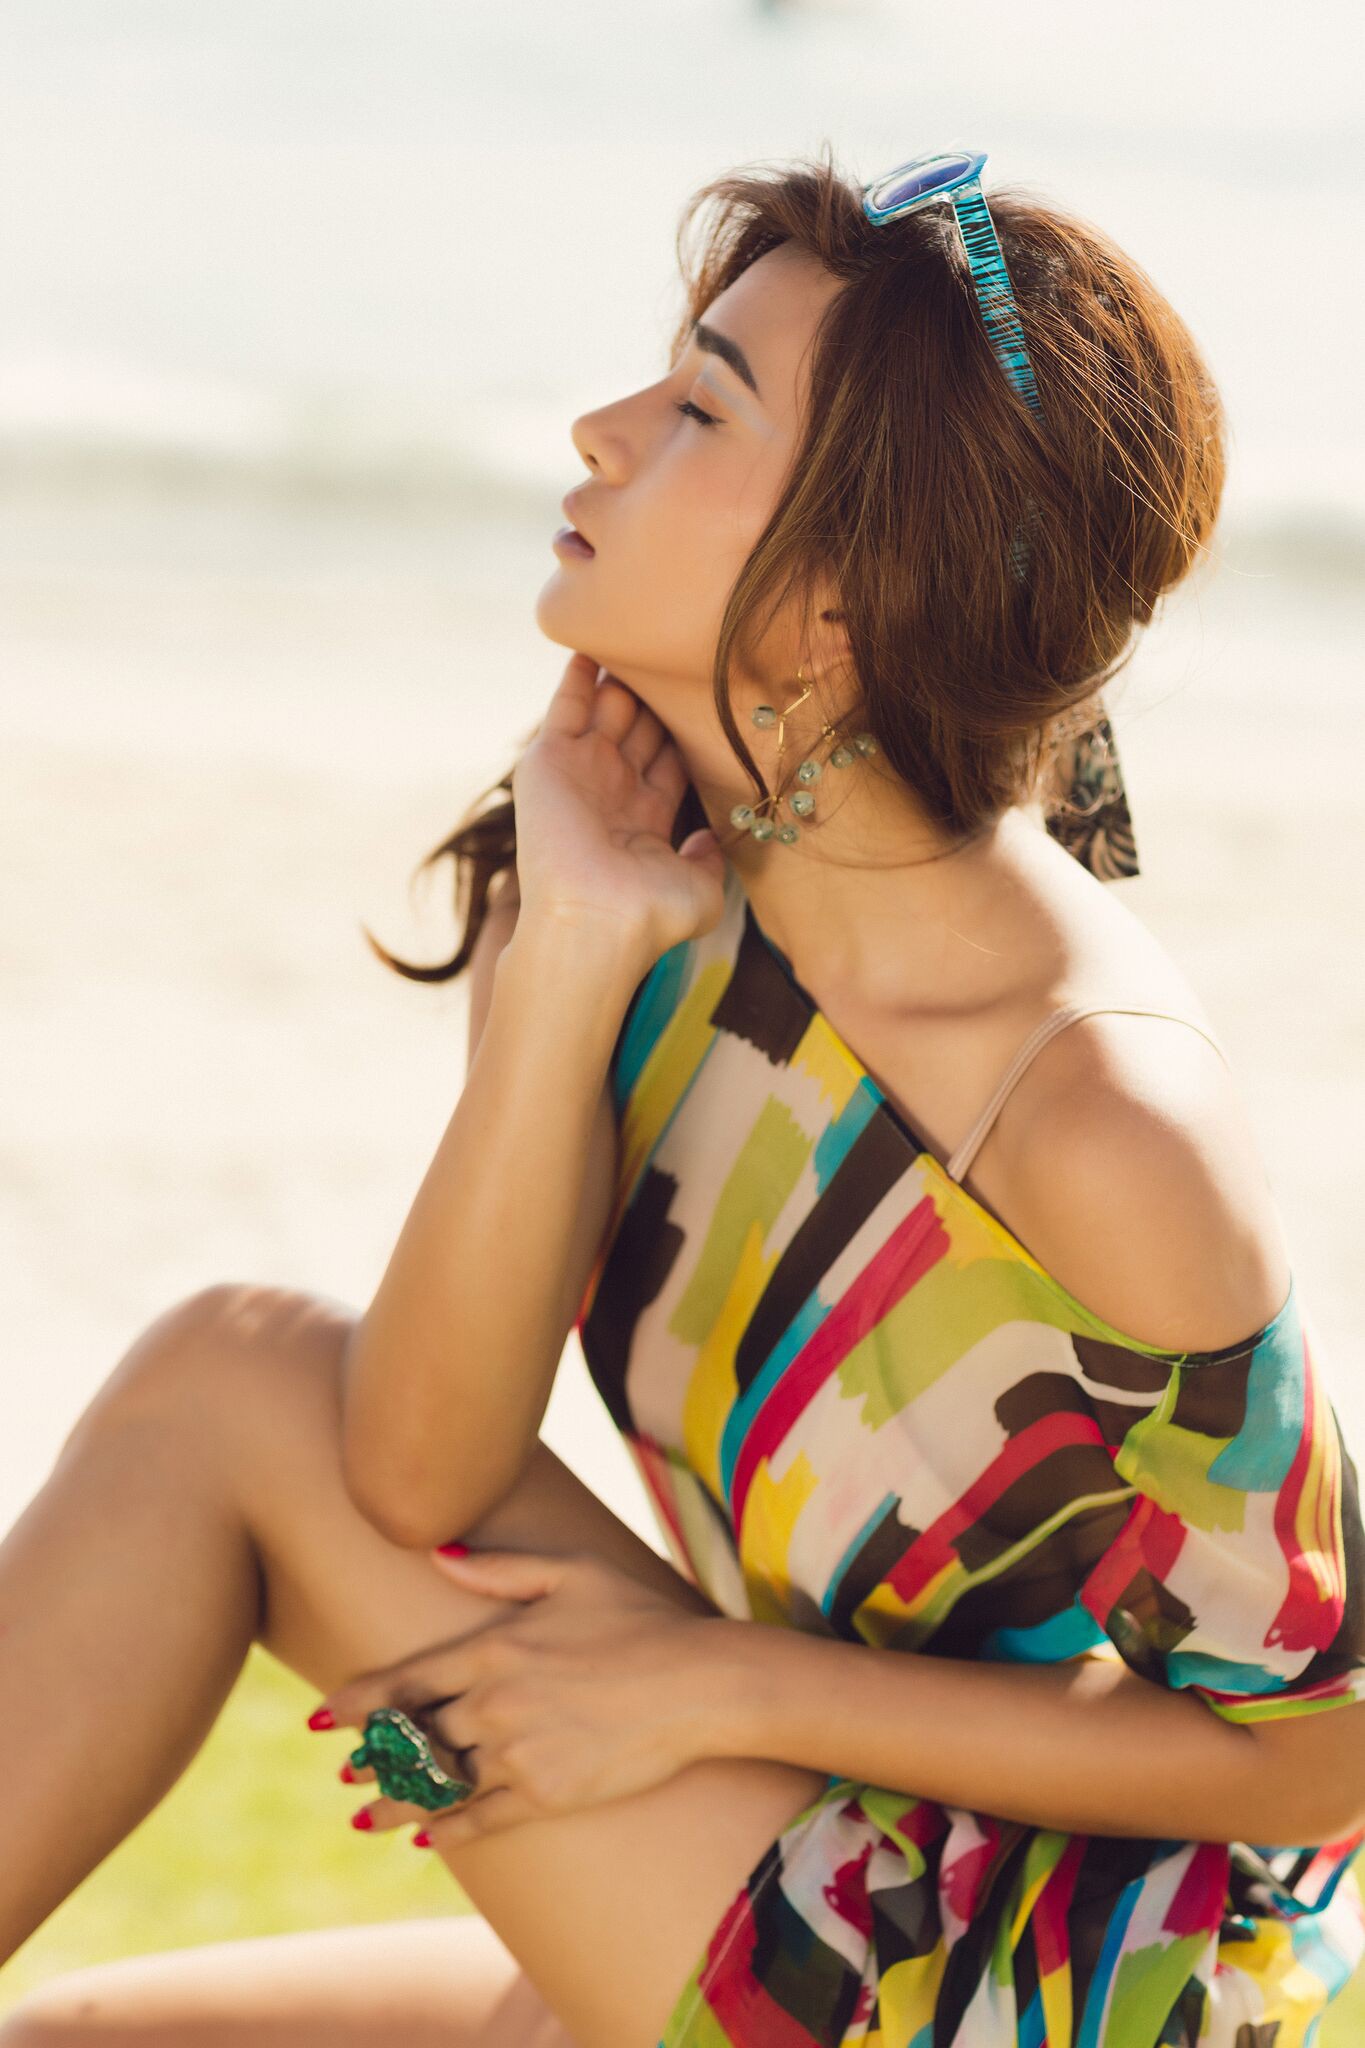 Mặc bikini gợi cảm, Kim Tuyến khoe da nâu khỏe khoắn trong nắng hè  - Ảnh 2.